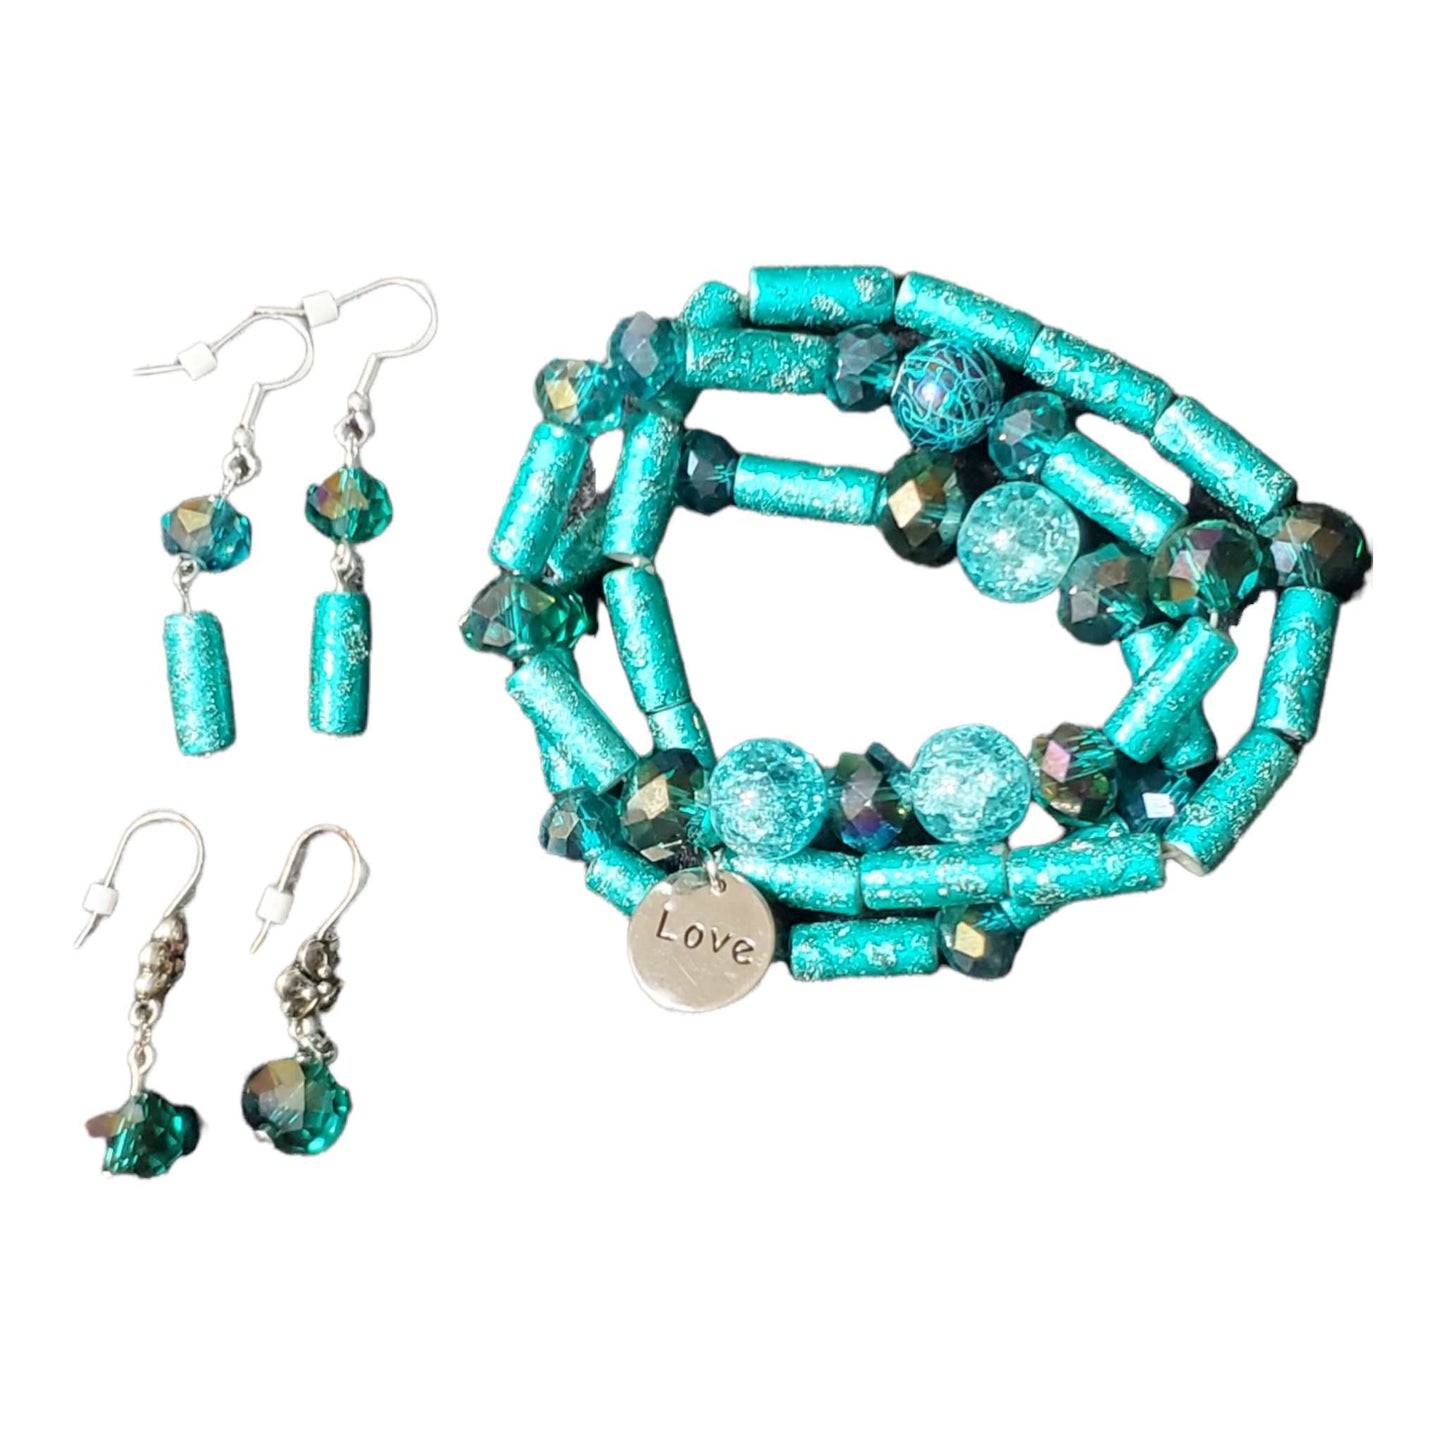 5 Piece Bracelet and Earrings Set, Aqua Blue